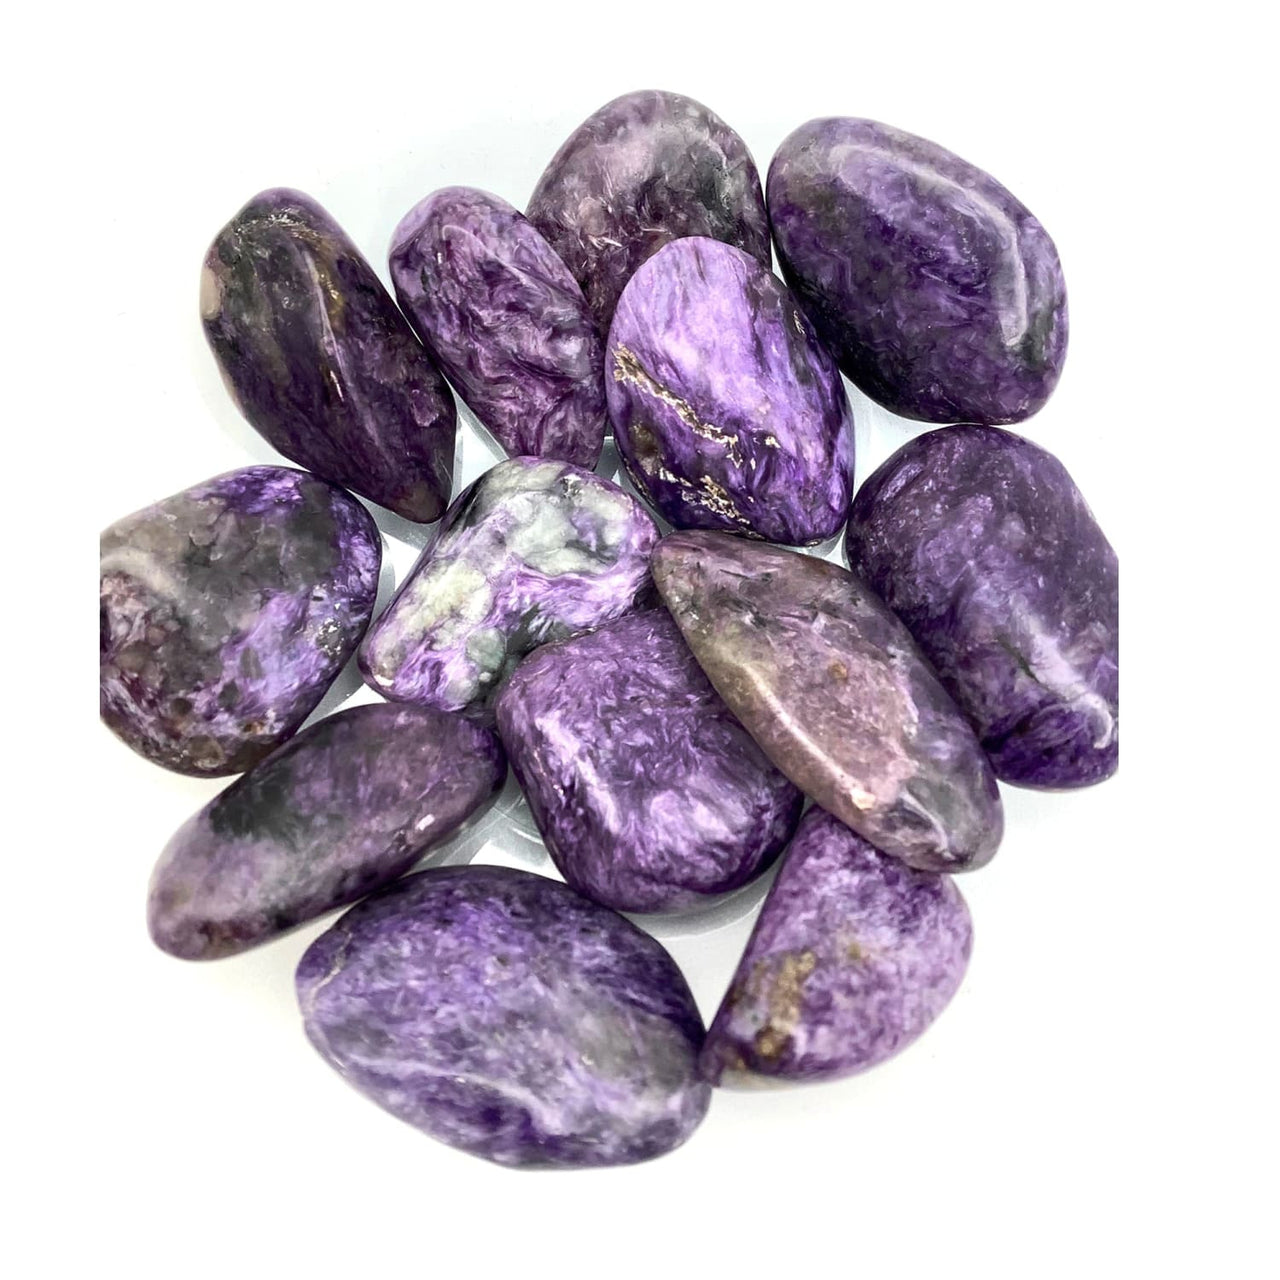 Charoite Tumbled Stone #SK2183 featuring stunning purple amethite gems